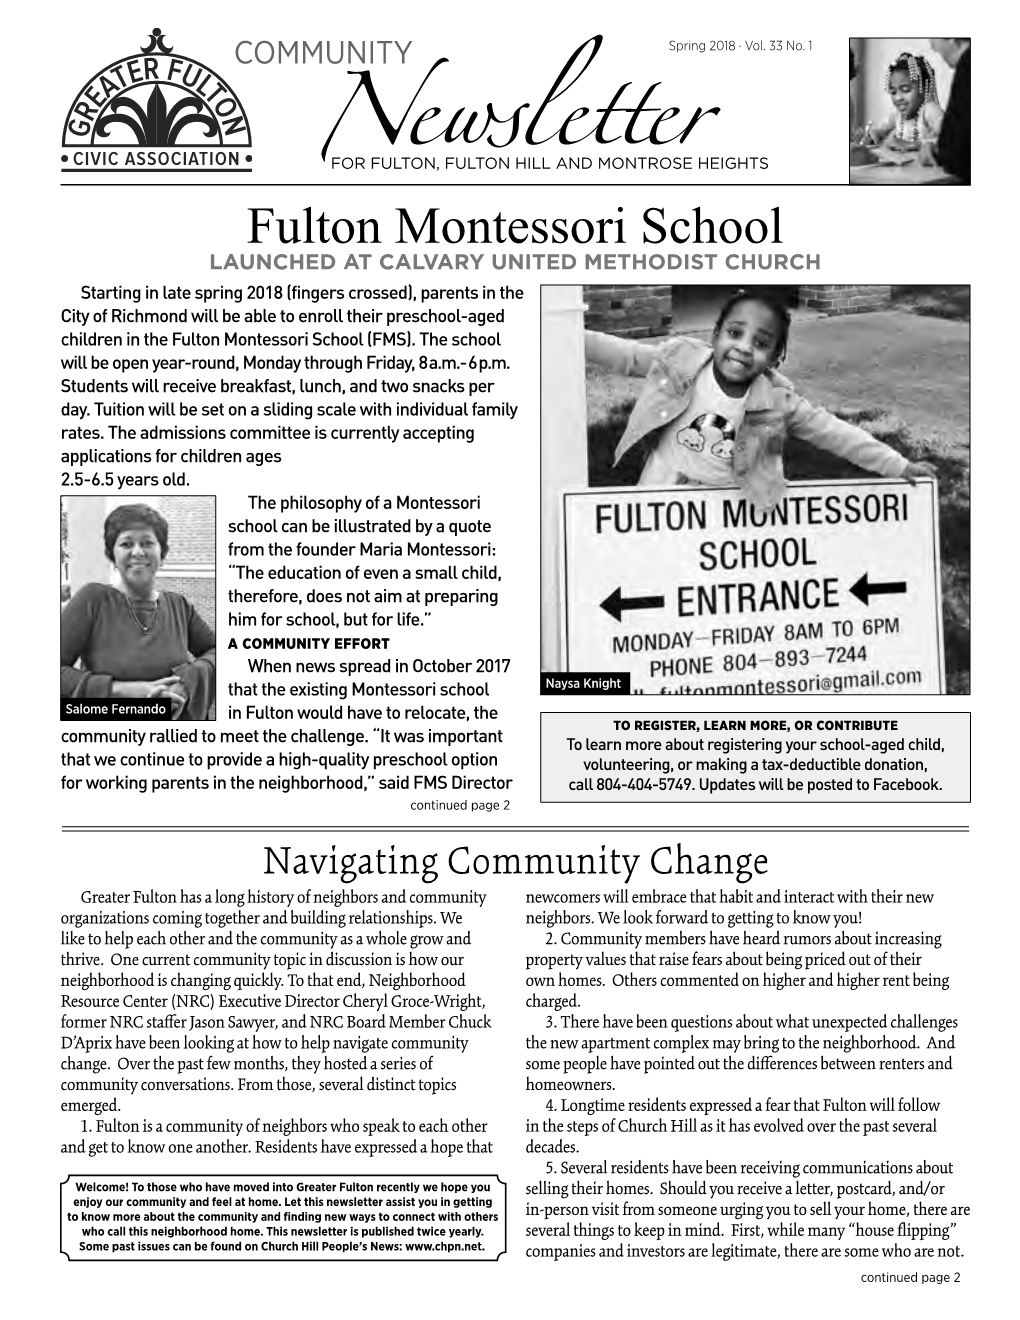 Fulton Montessori School (FMS)